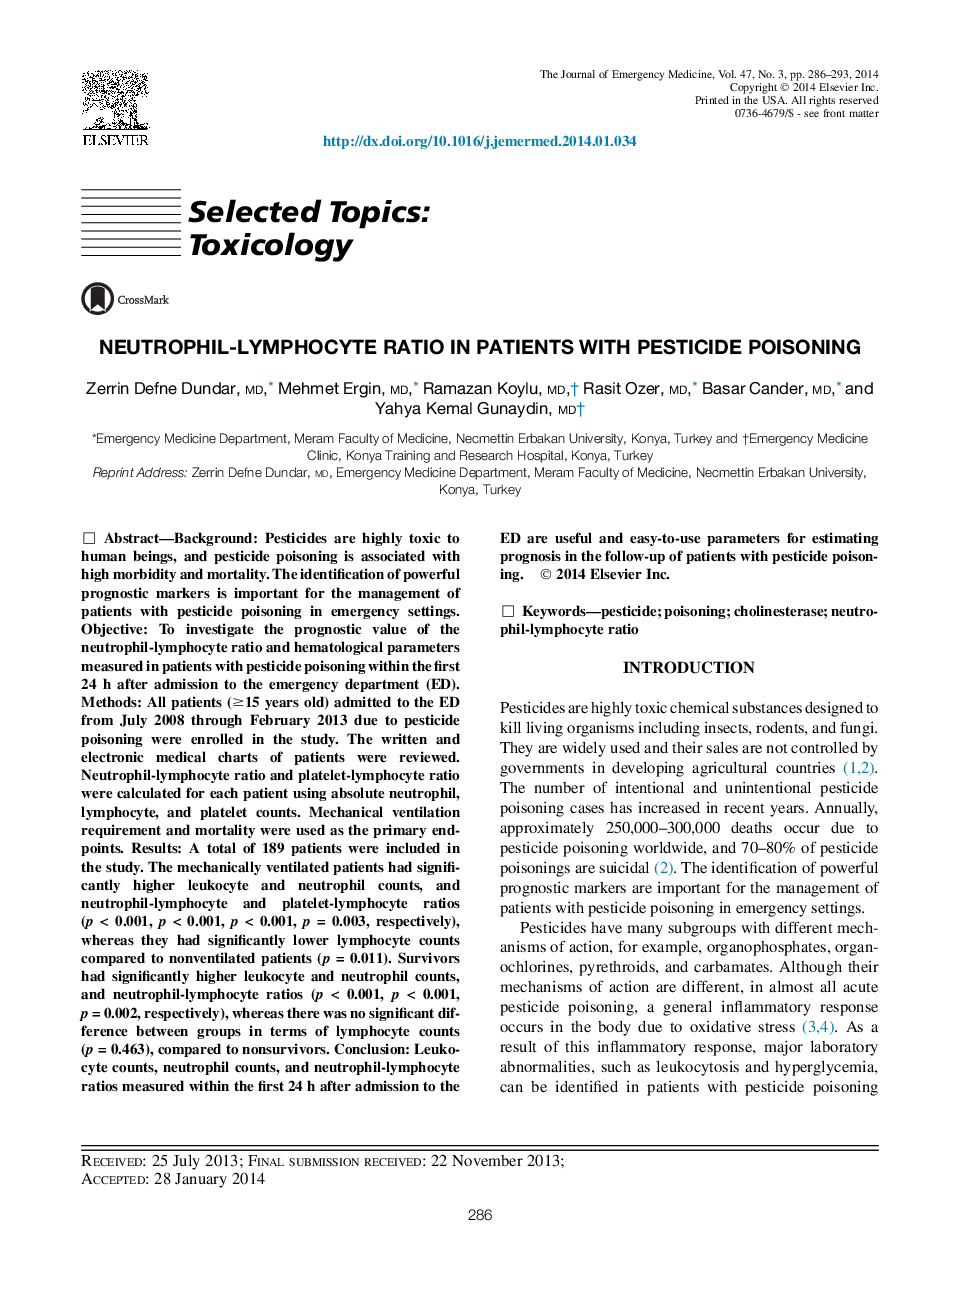 Neutrophil-Lymphocyte Ratio in Patients with Pesticide Poisoning